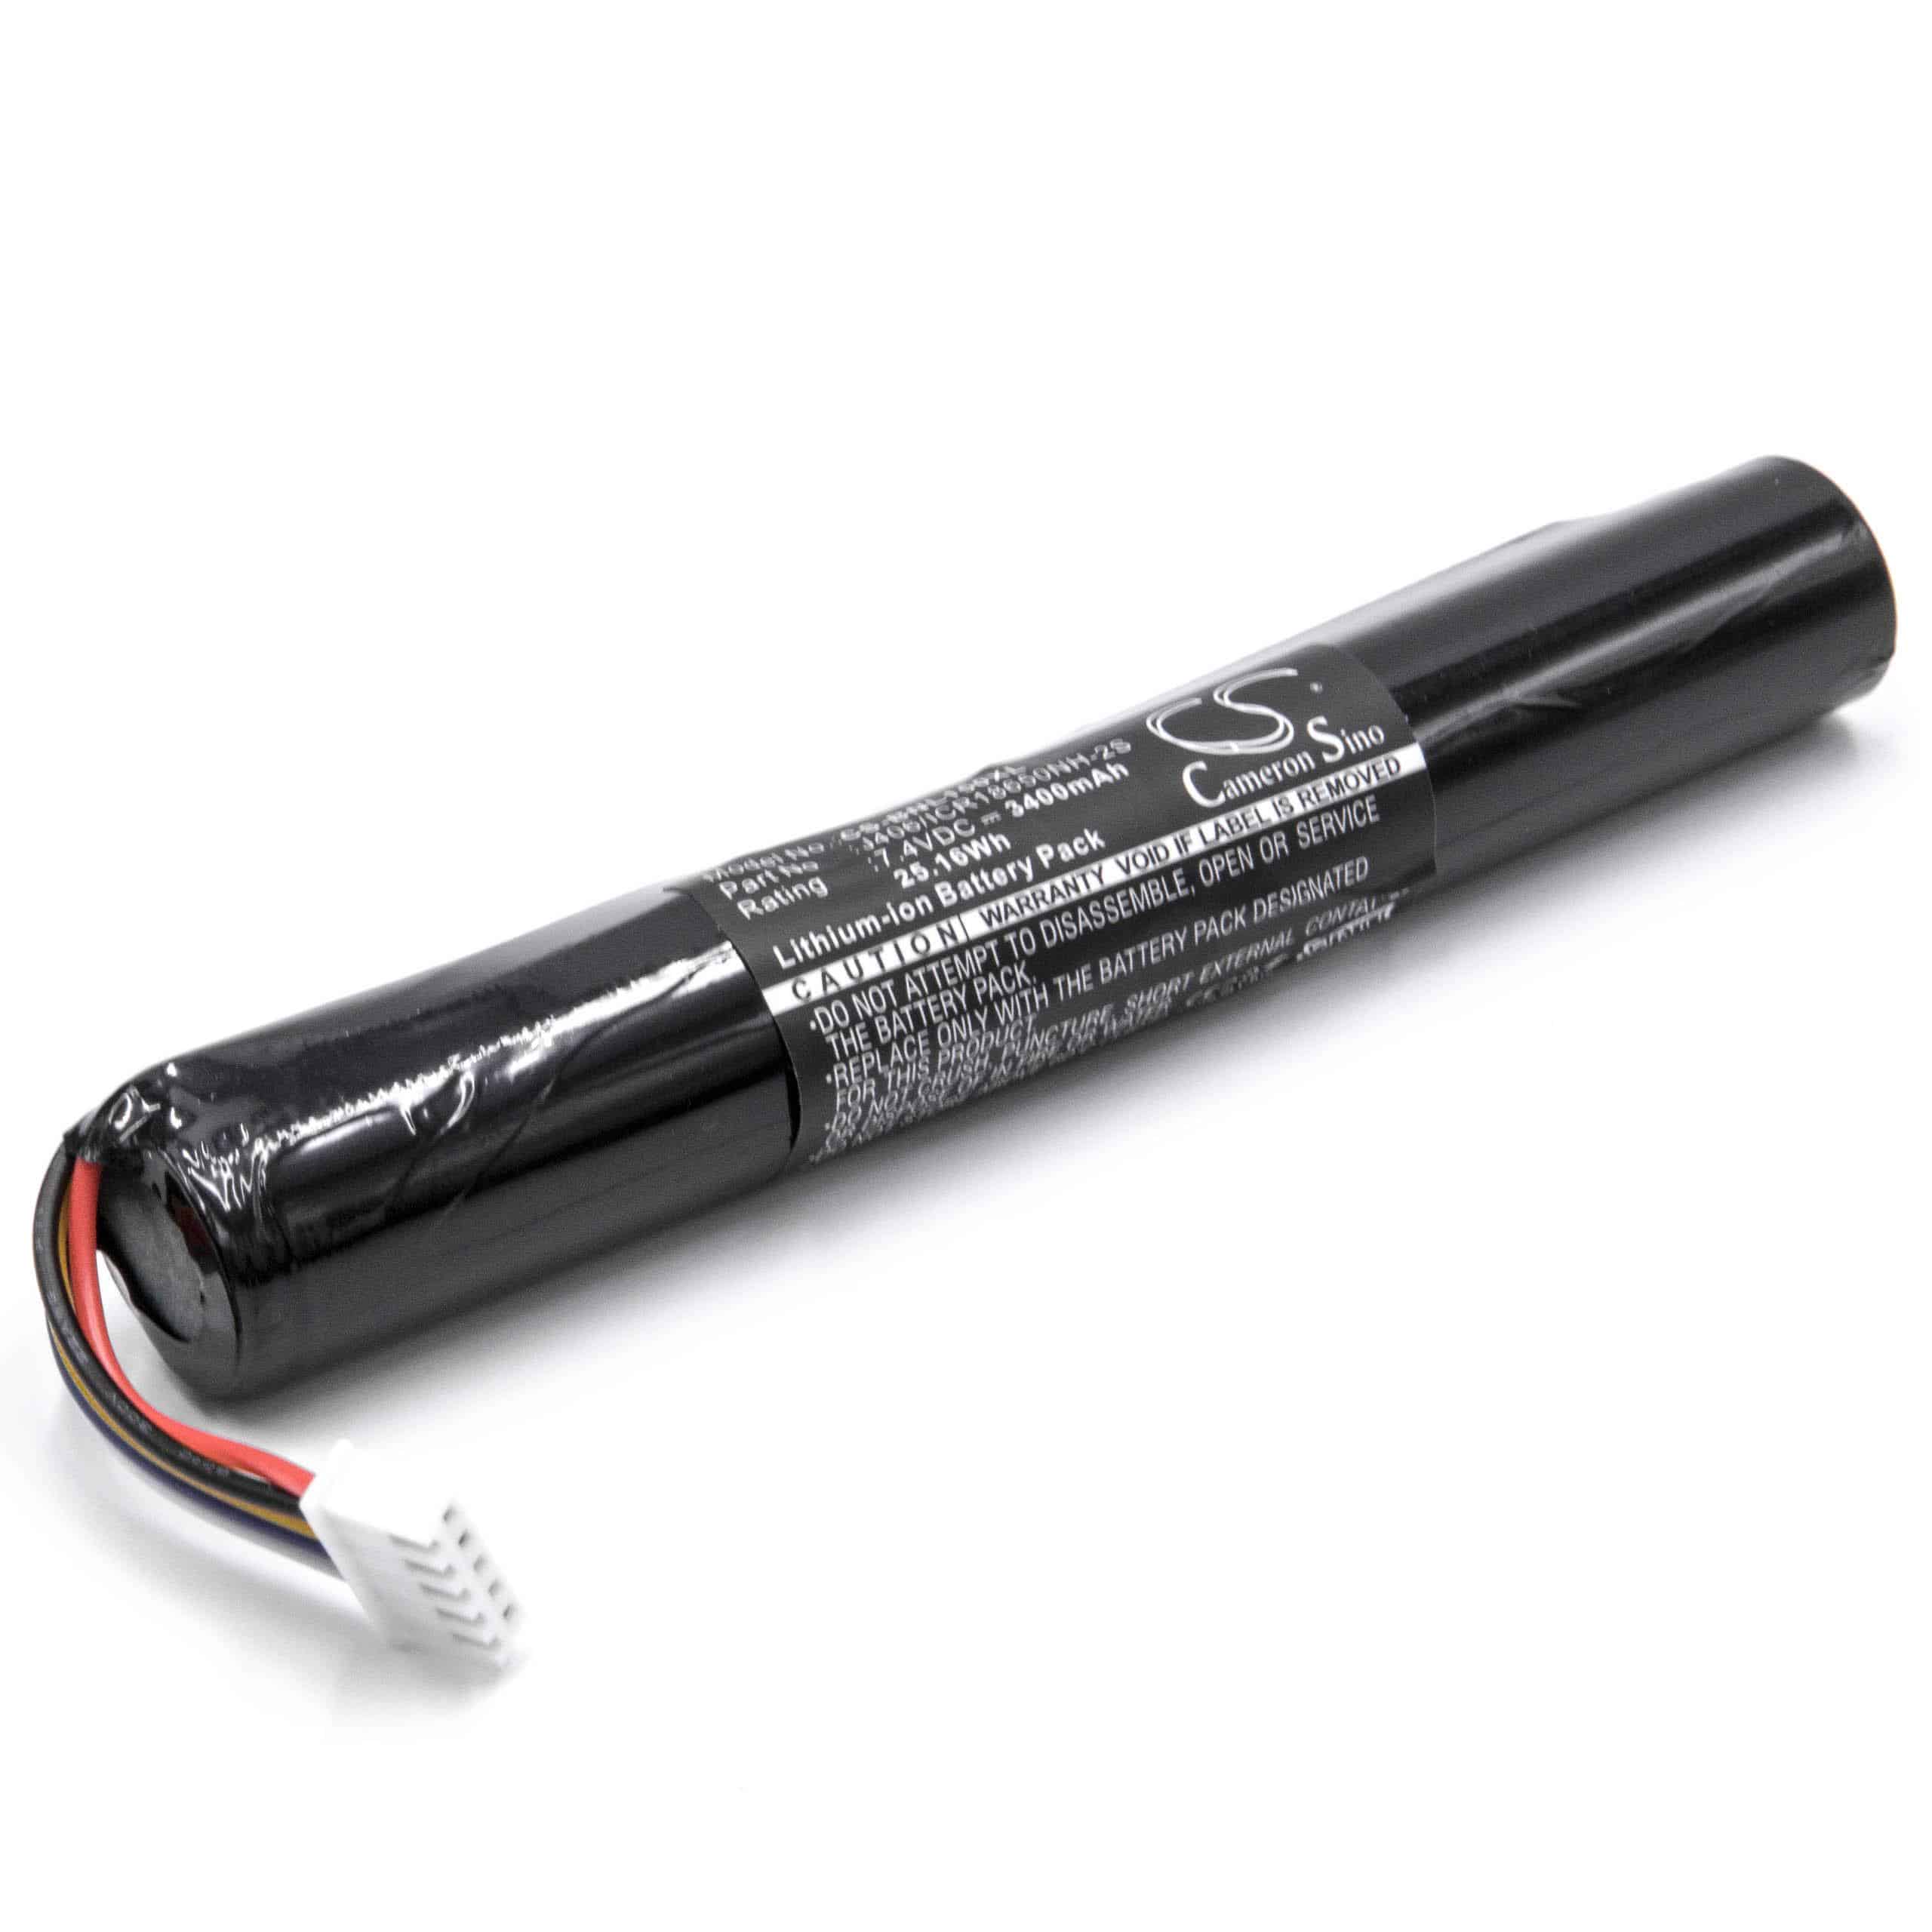  Battery replaces Bang & Olufsen J406/ICR18650NH-2S for Bang & OlufsenLoudspeaker - Li-Ion 3400 mAh